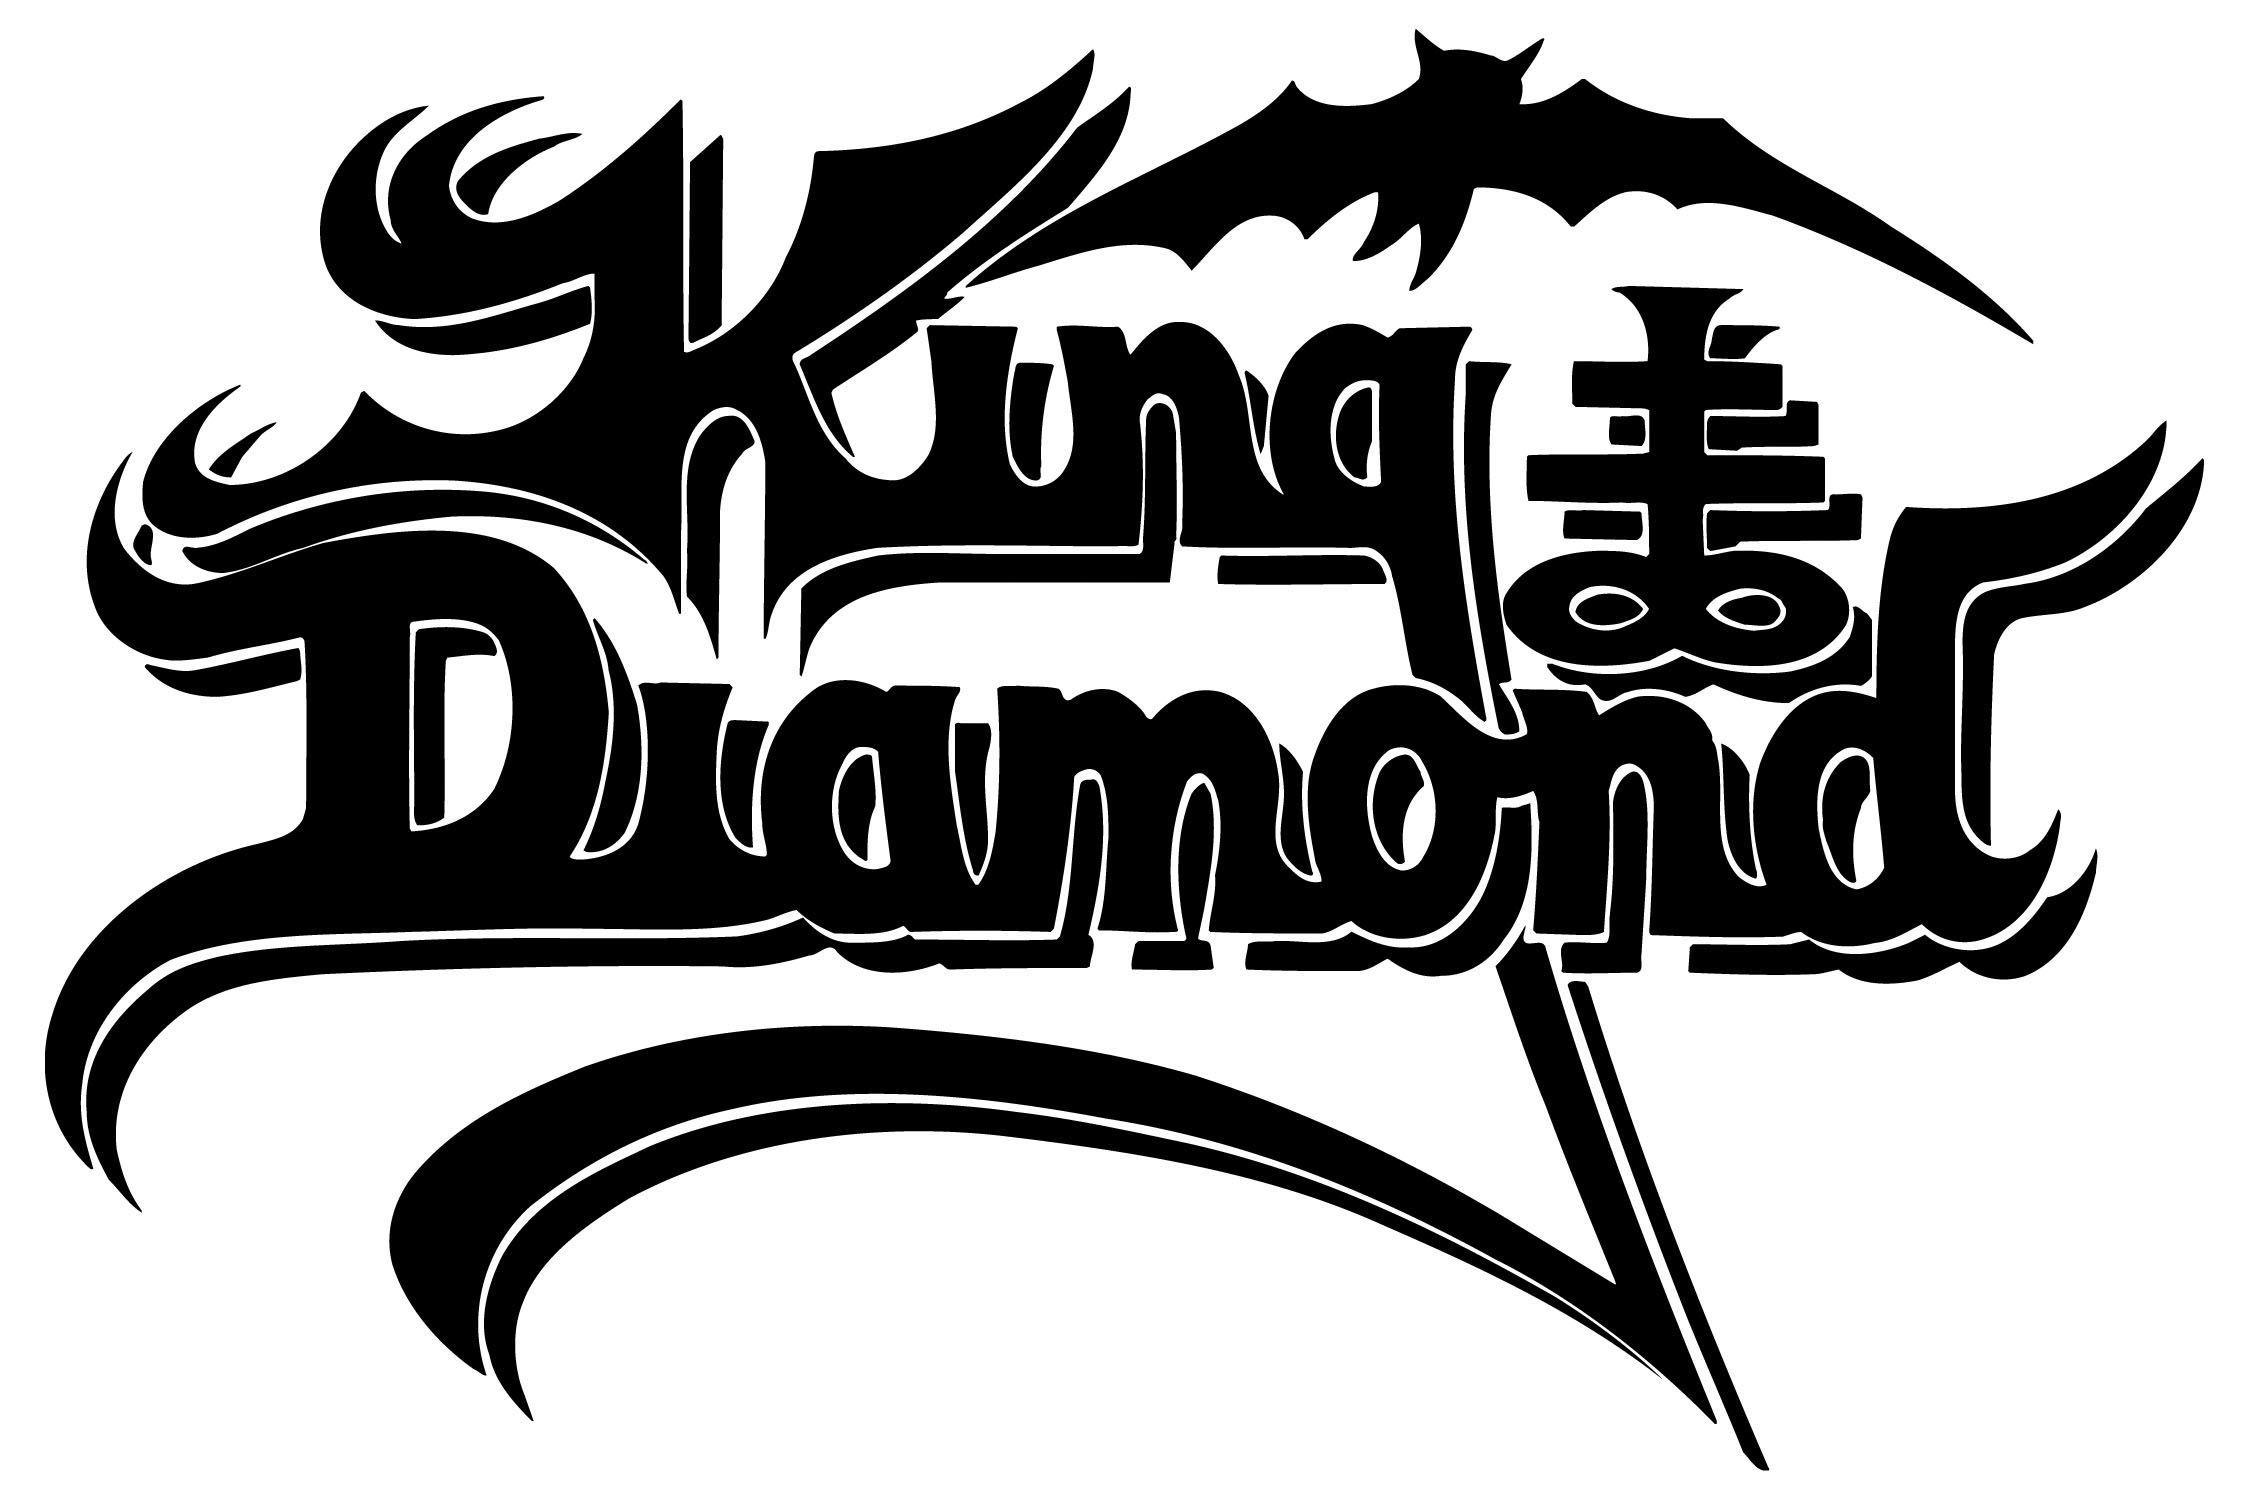 Metal Diamond Logo - Pin by jorge on KING DIAMOND | King diamond, King, Band logos